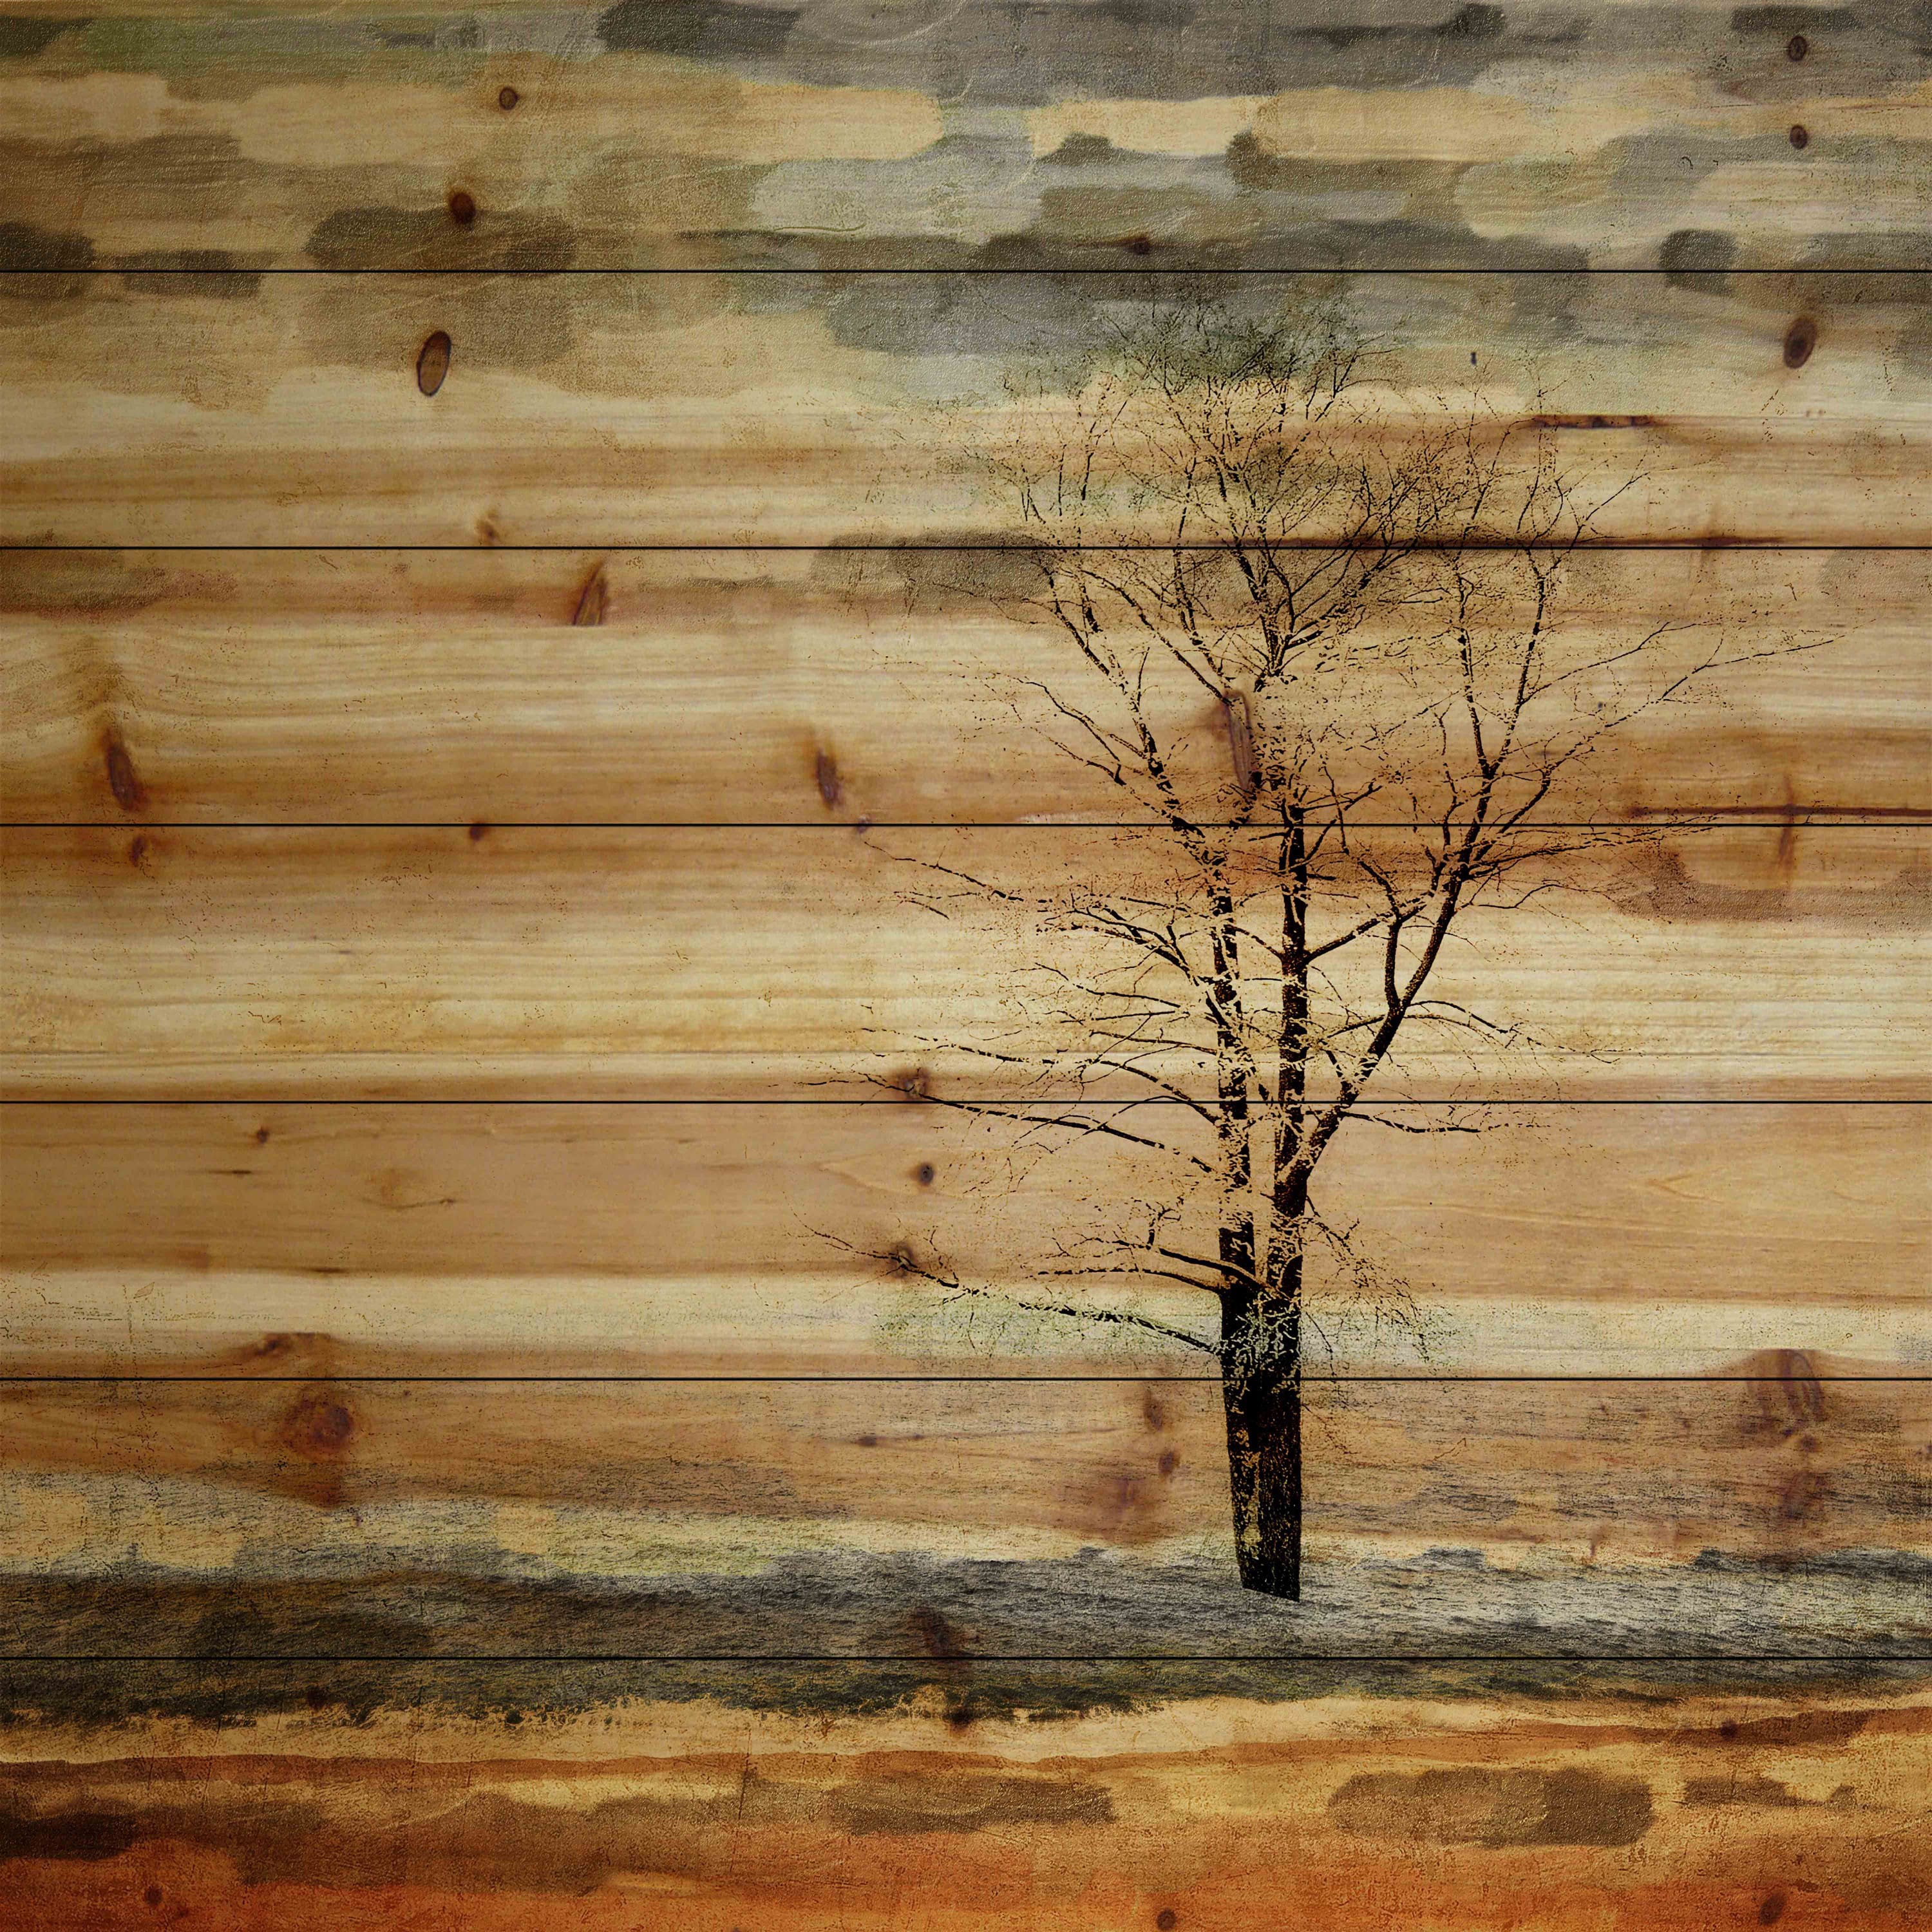 Flower wood мм2. Деревянная стена. Дерево на стене. Деревянная доска на стену. Деревянное панно на стену.